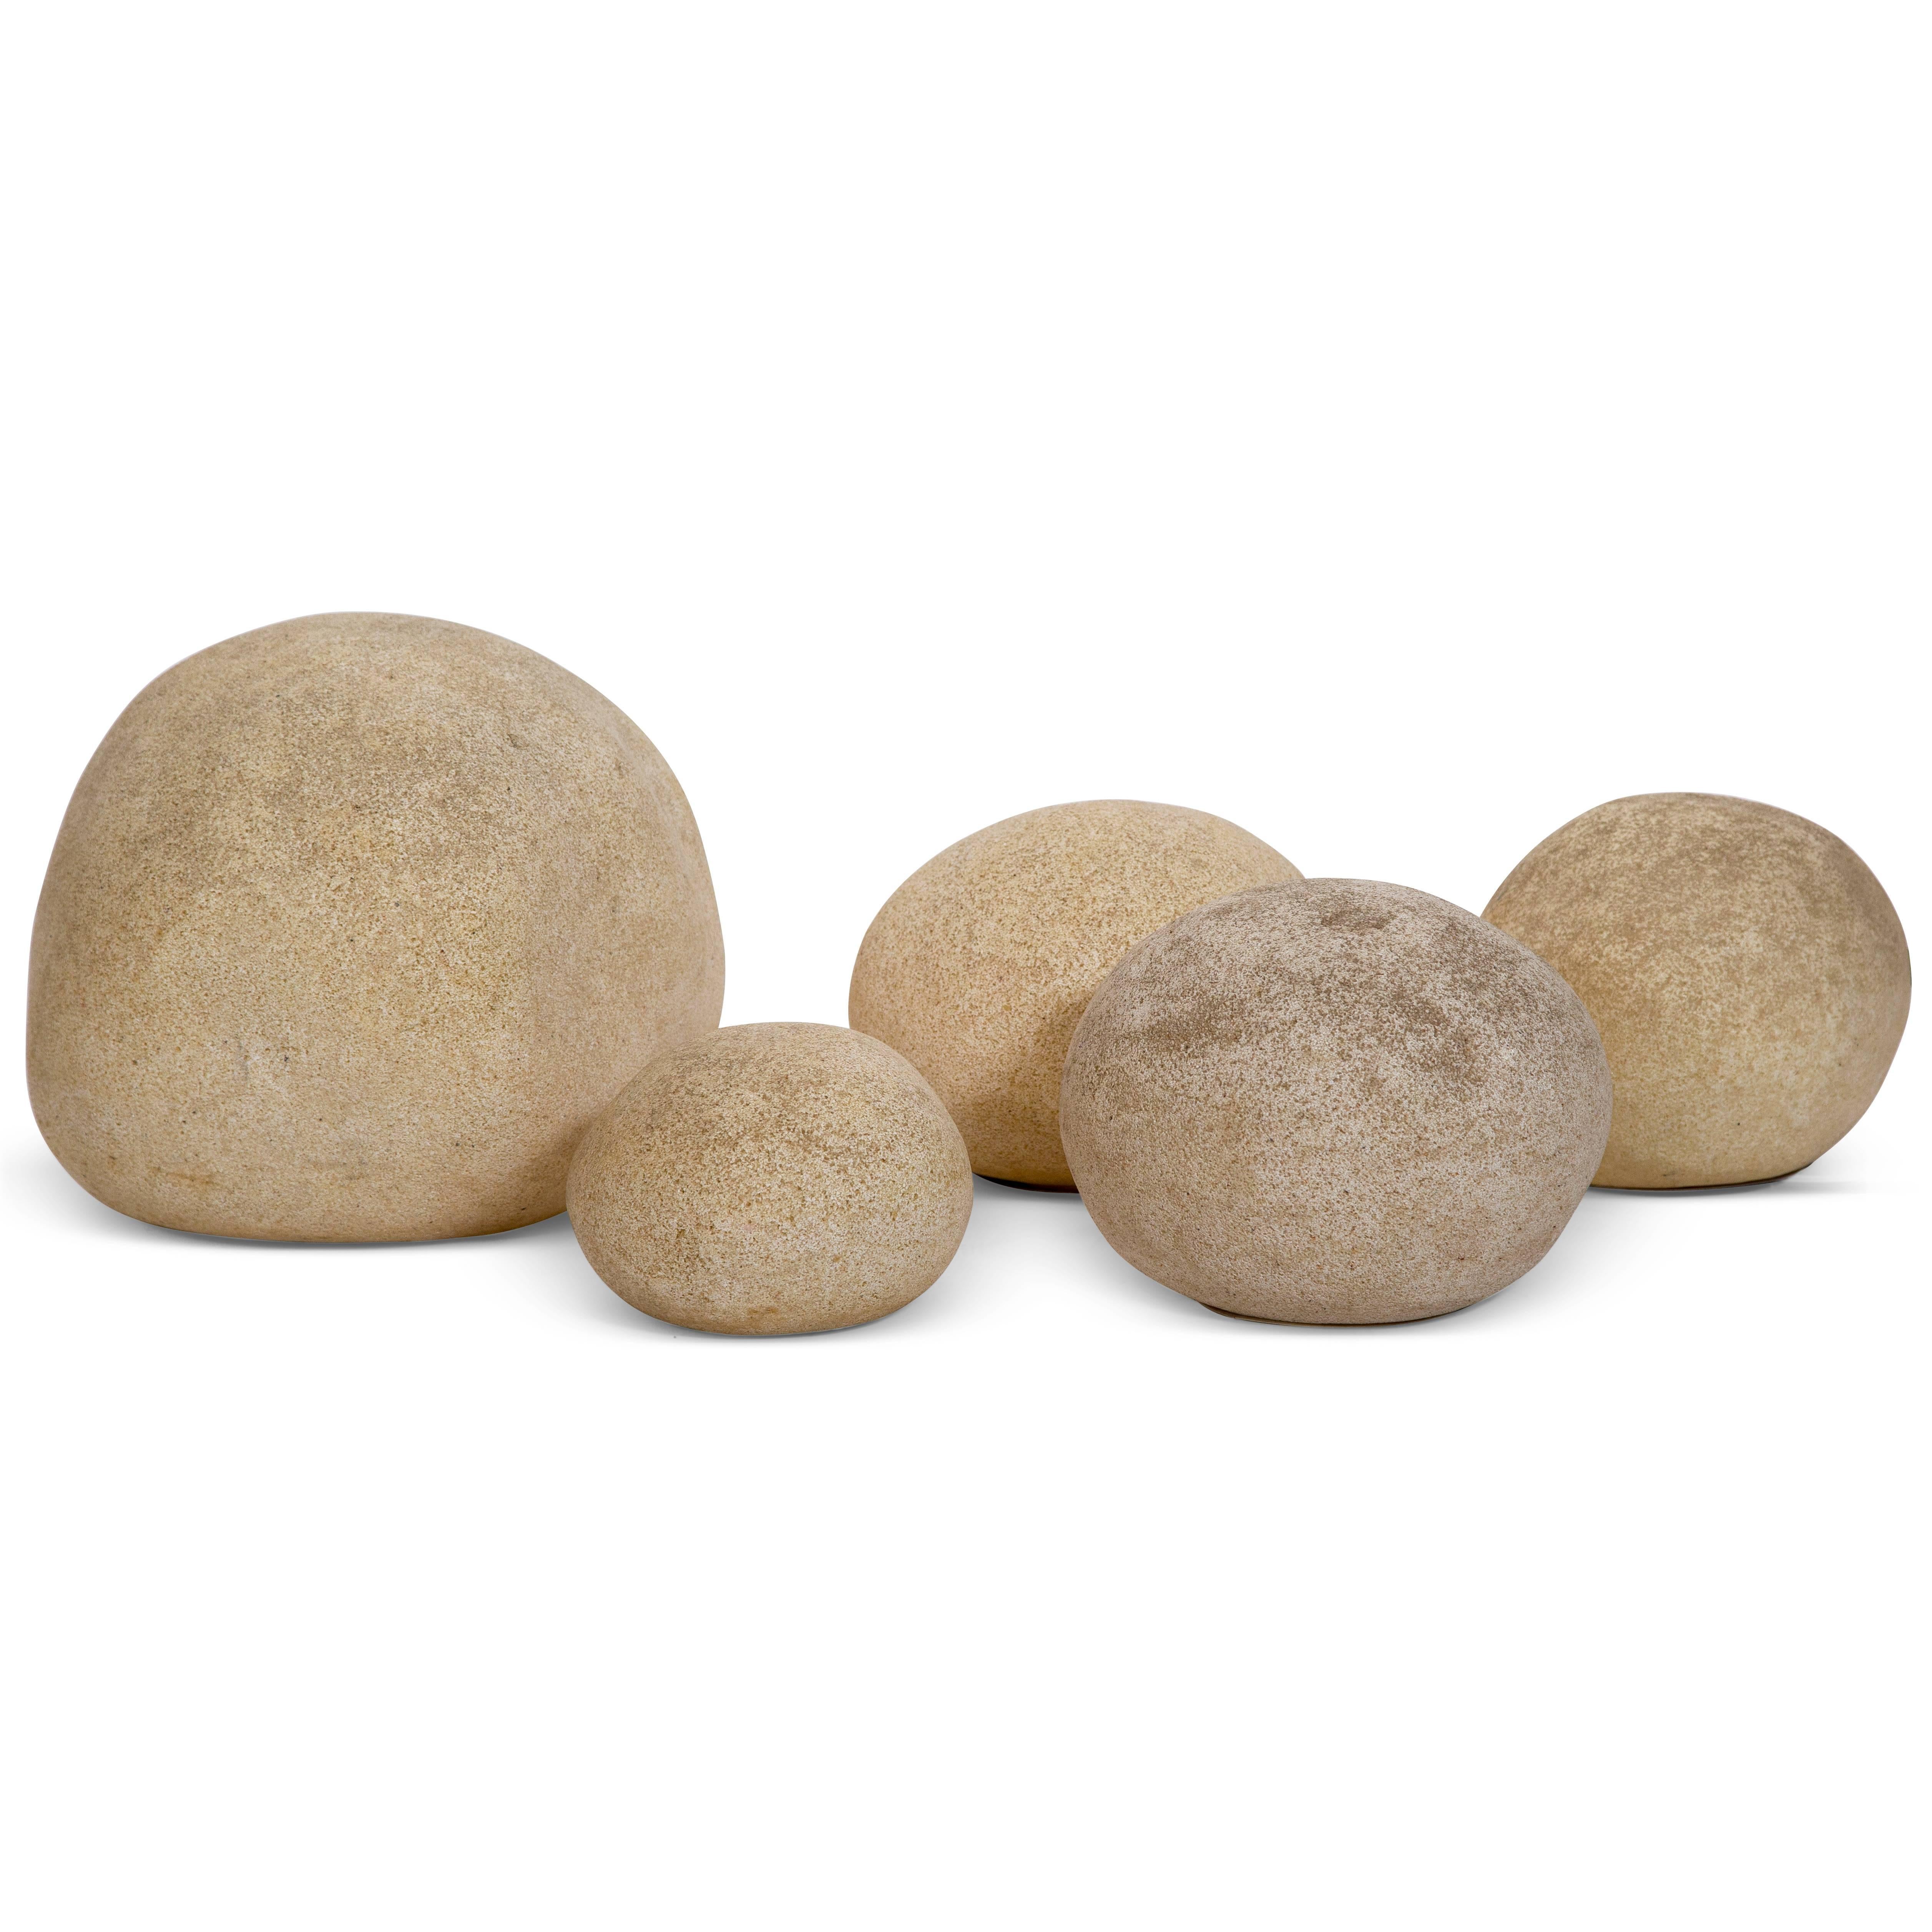 Set of five hand-cast fiberglass rocks that illuminate.
Measures: S-9